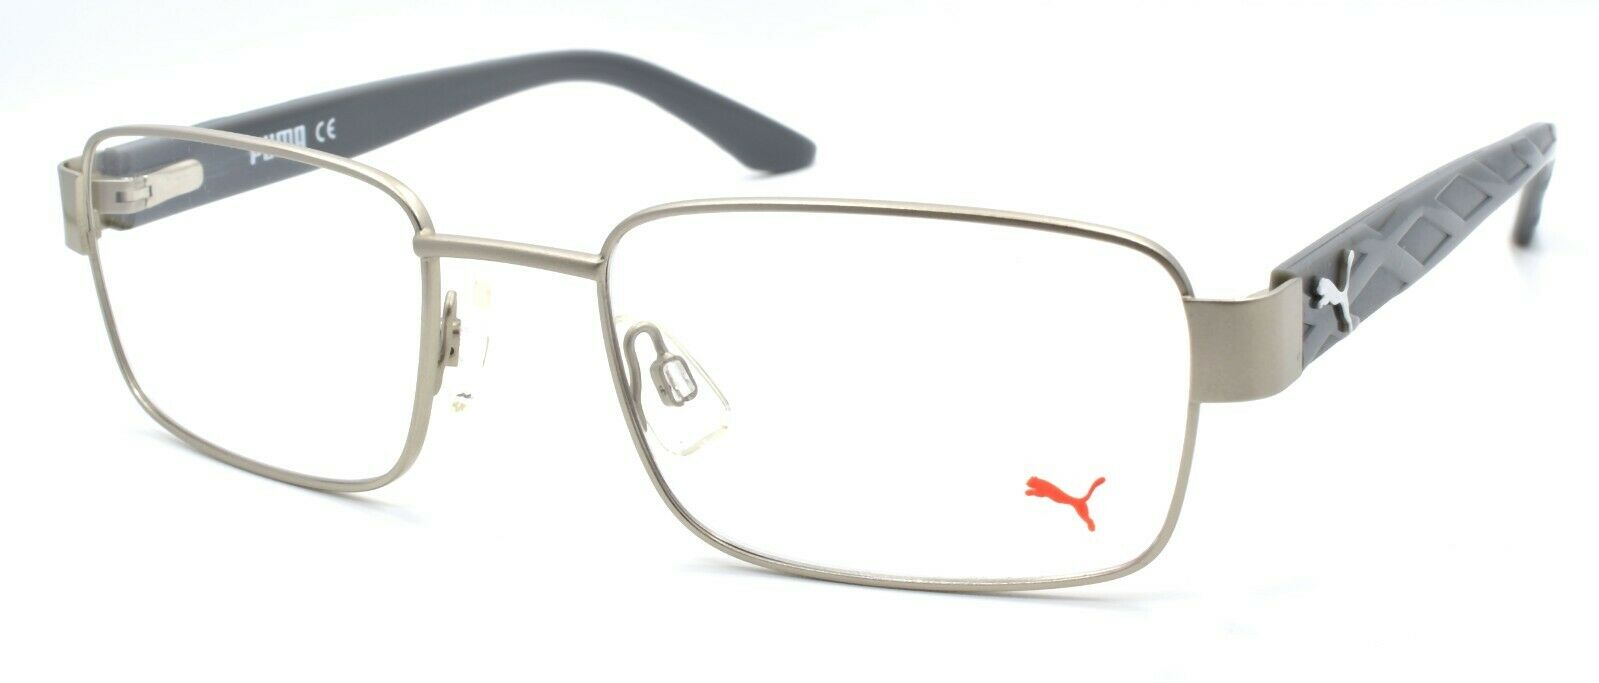 1-PUMA PU0025O 003 Men's Eyeglasses Frames 54-20-140 Silver / Gray-889652003986-IKSpecs